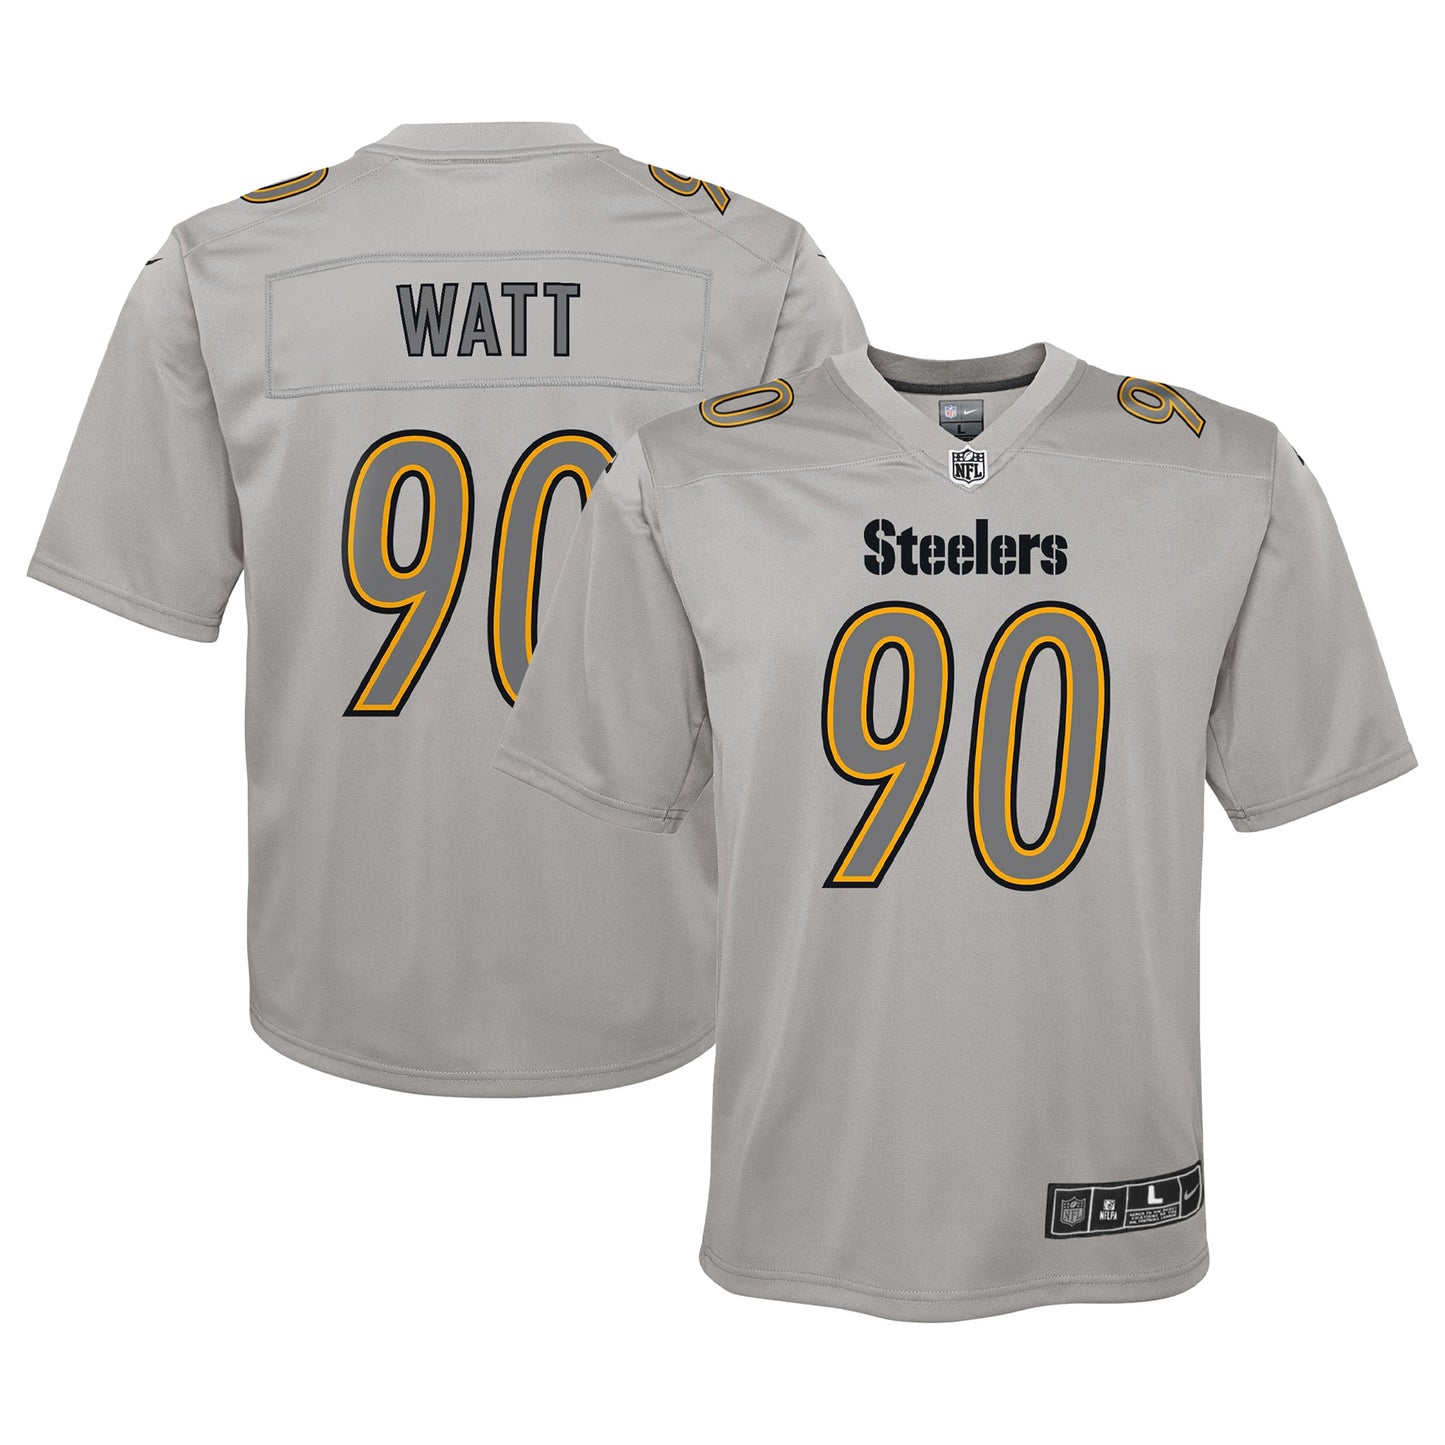 T.J. Watt Pittsburgh Steelers Nike Youth Atmosphere Game Jersey - Gray